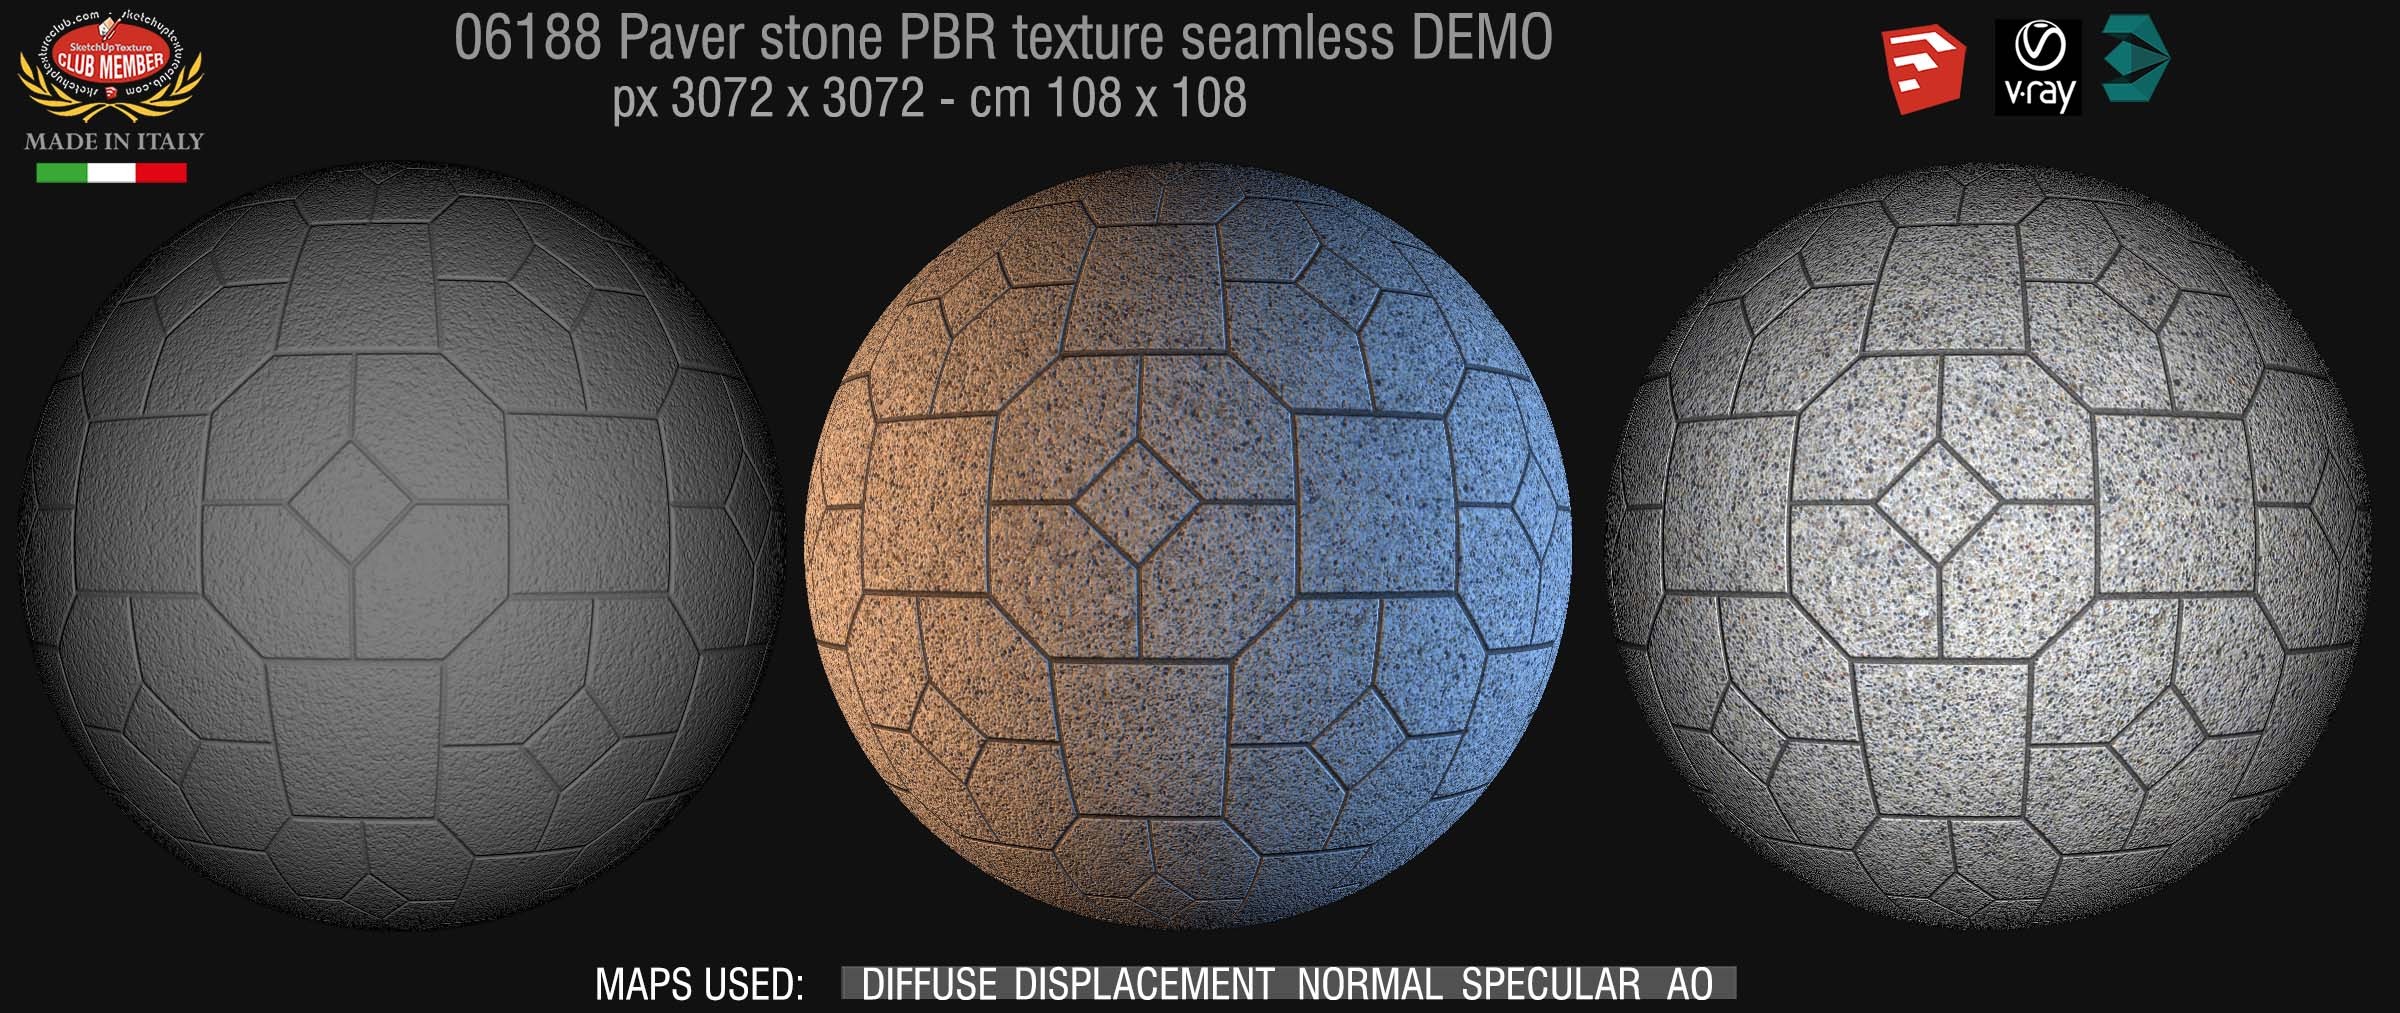 06188 Pavers stone PBR texture seamless DEMO